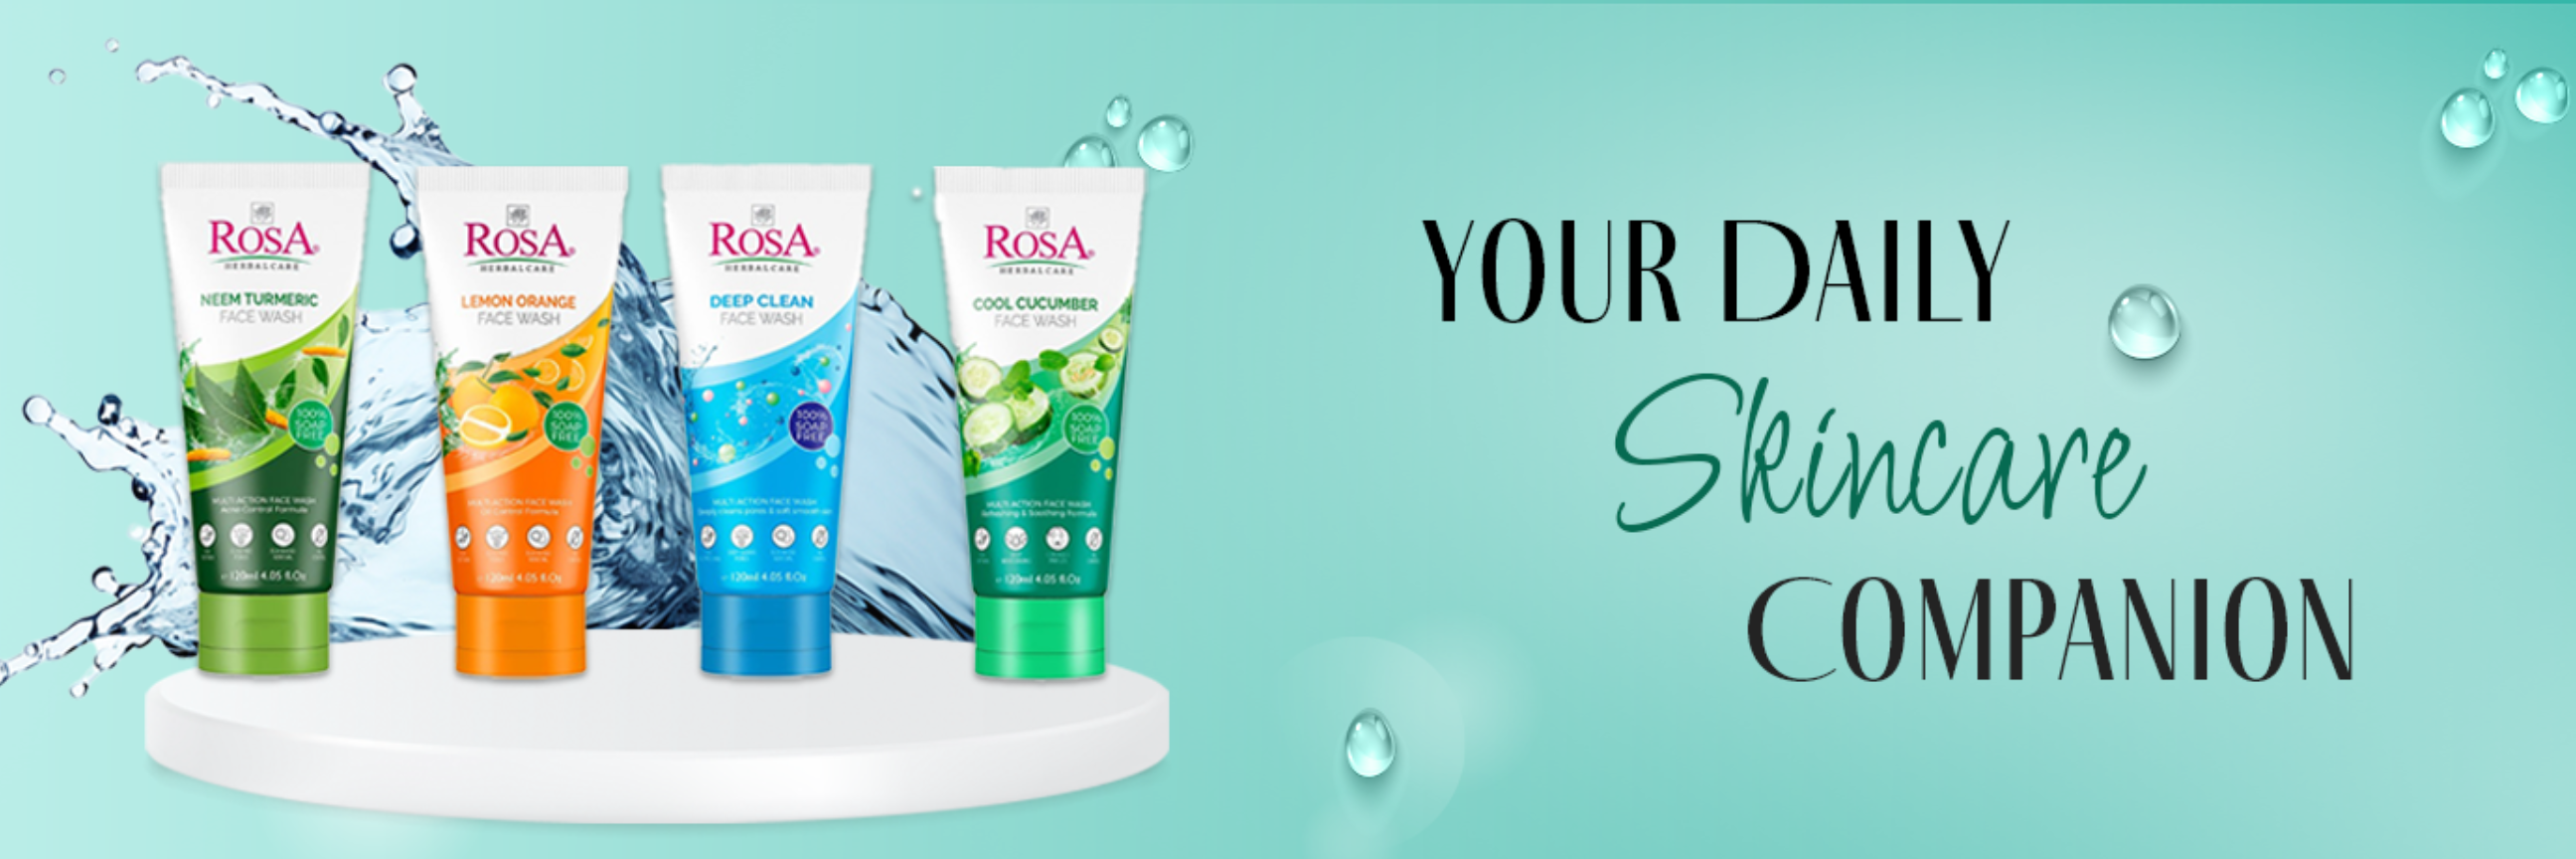 Rosa Herbalcare face wash 